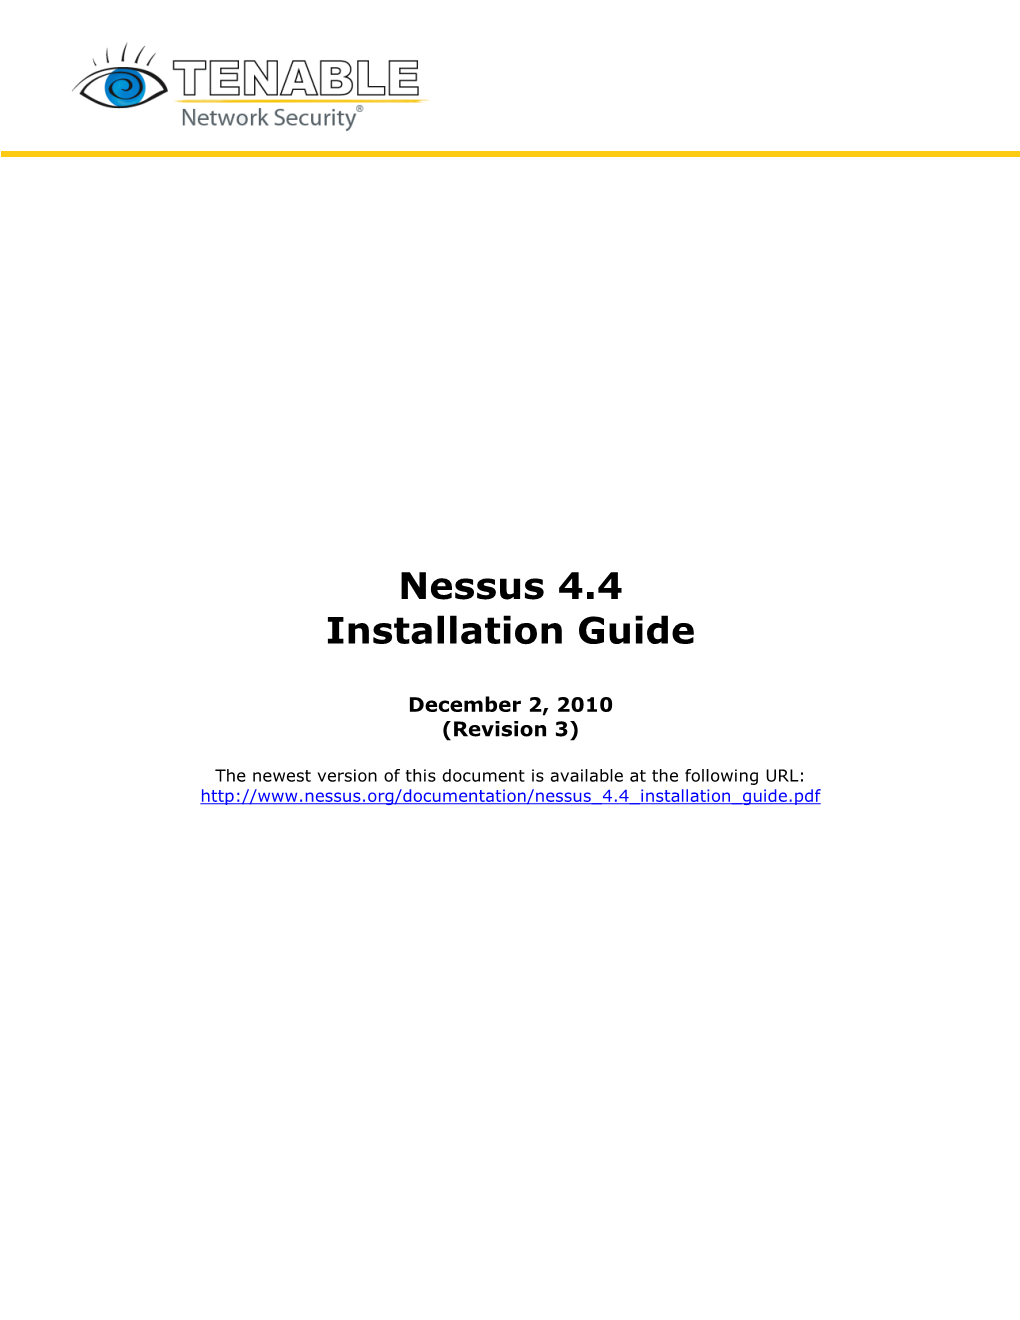 Nessus 4.4 Installation Guide